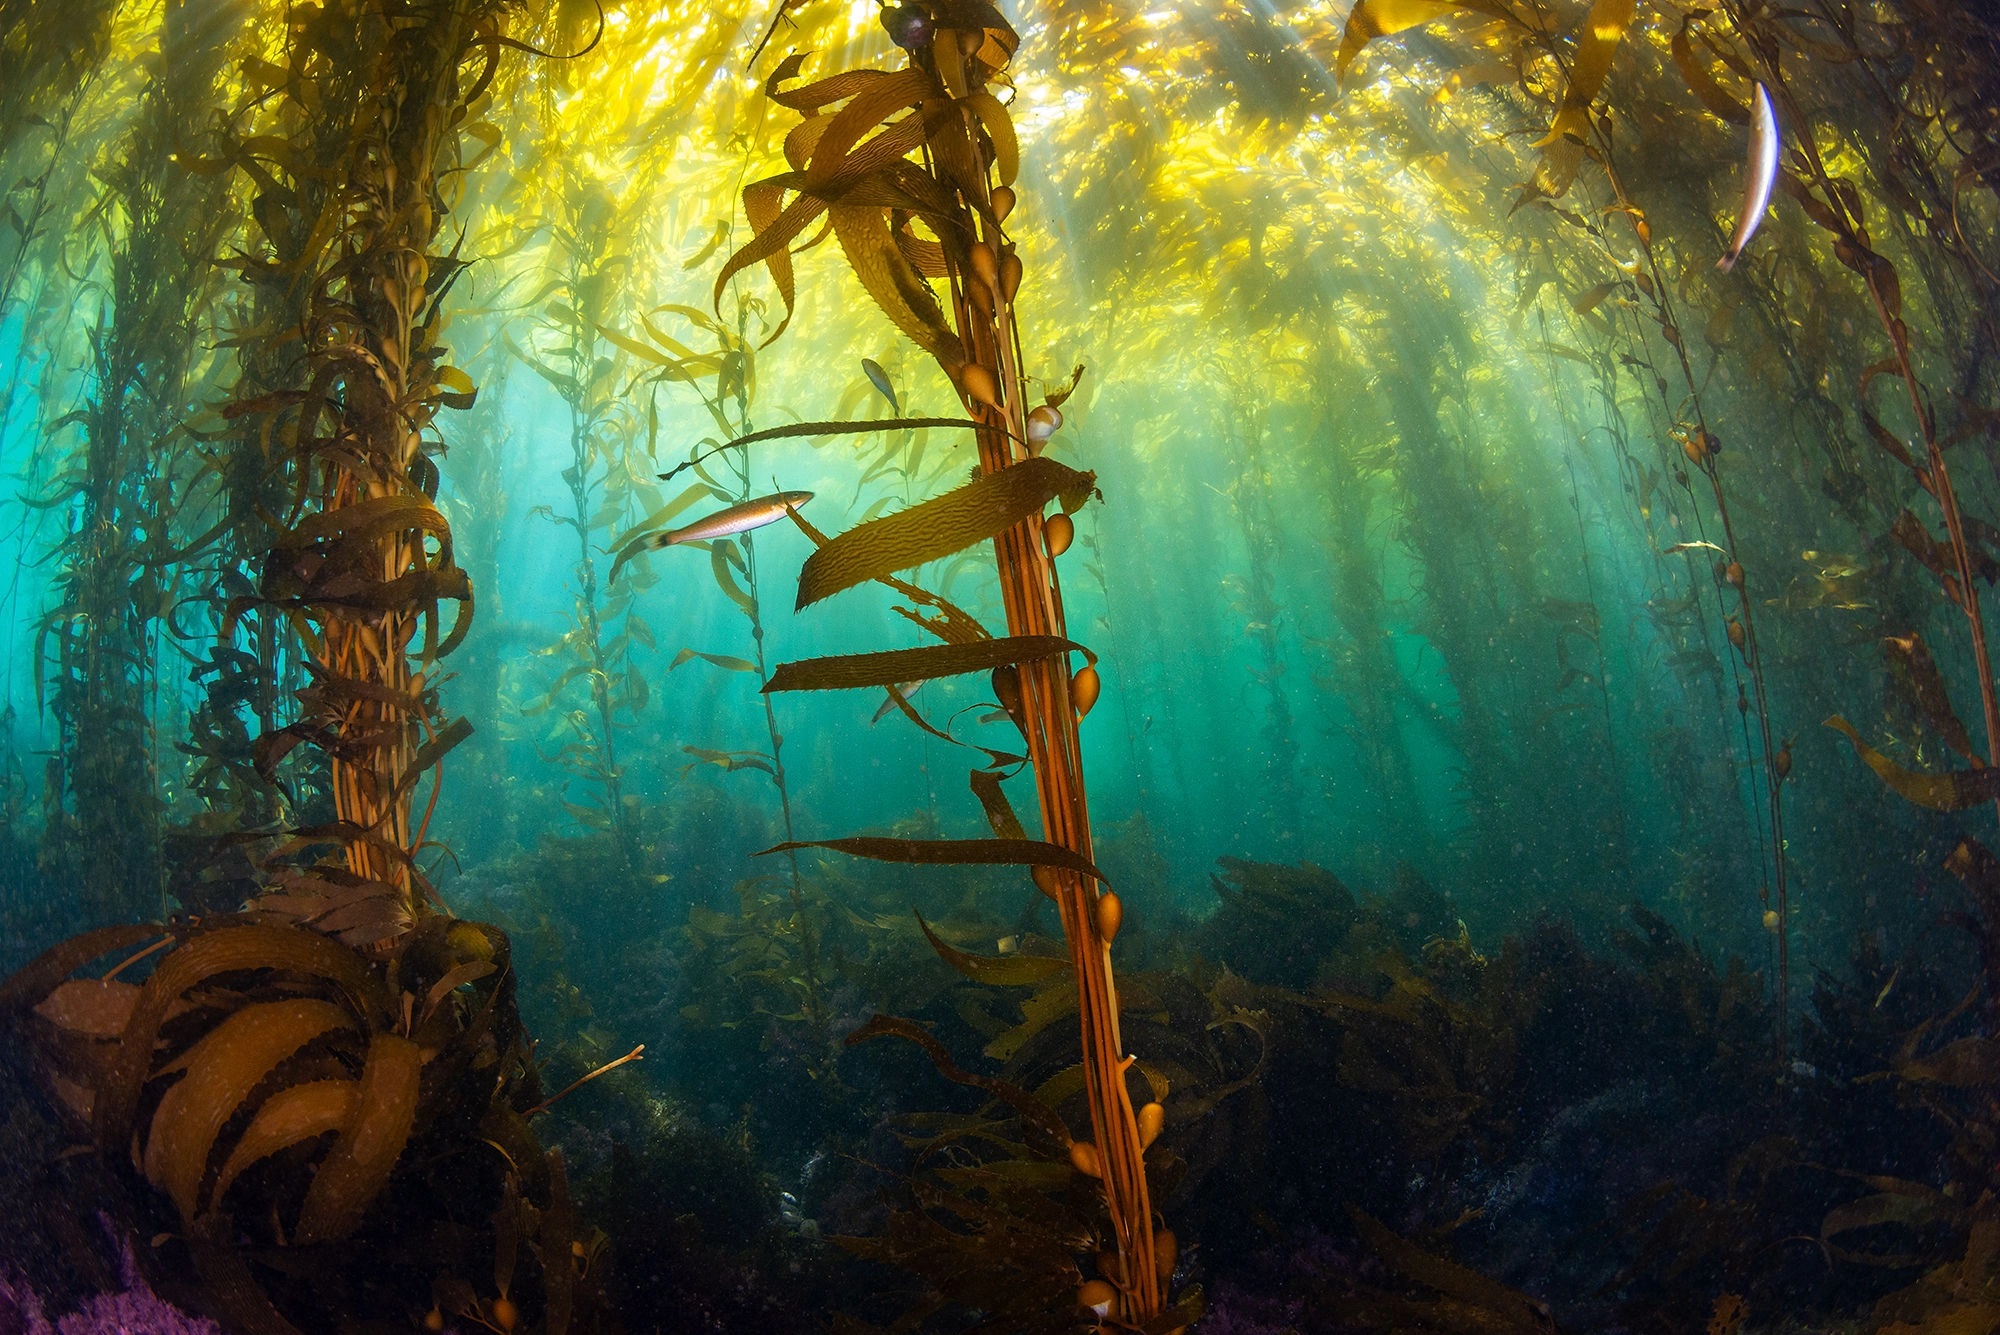 An image of seaweed